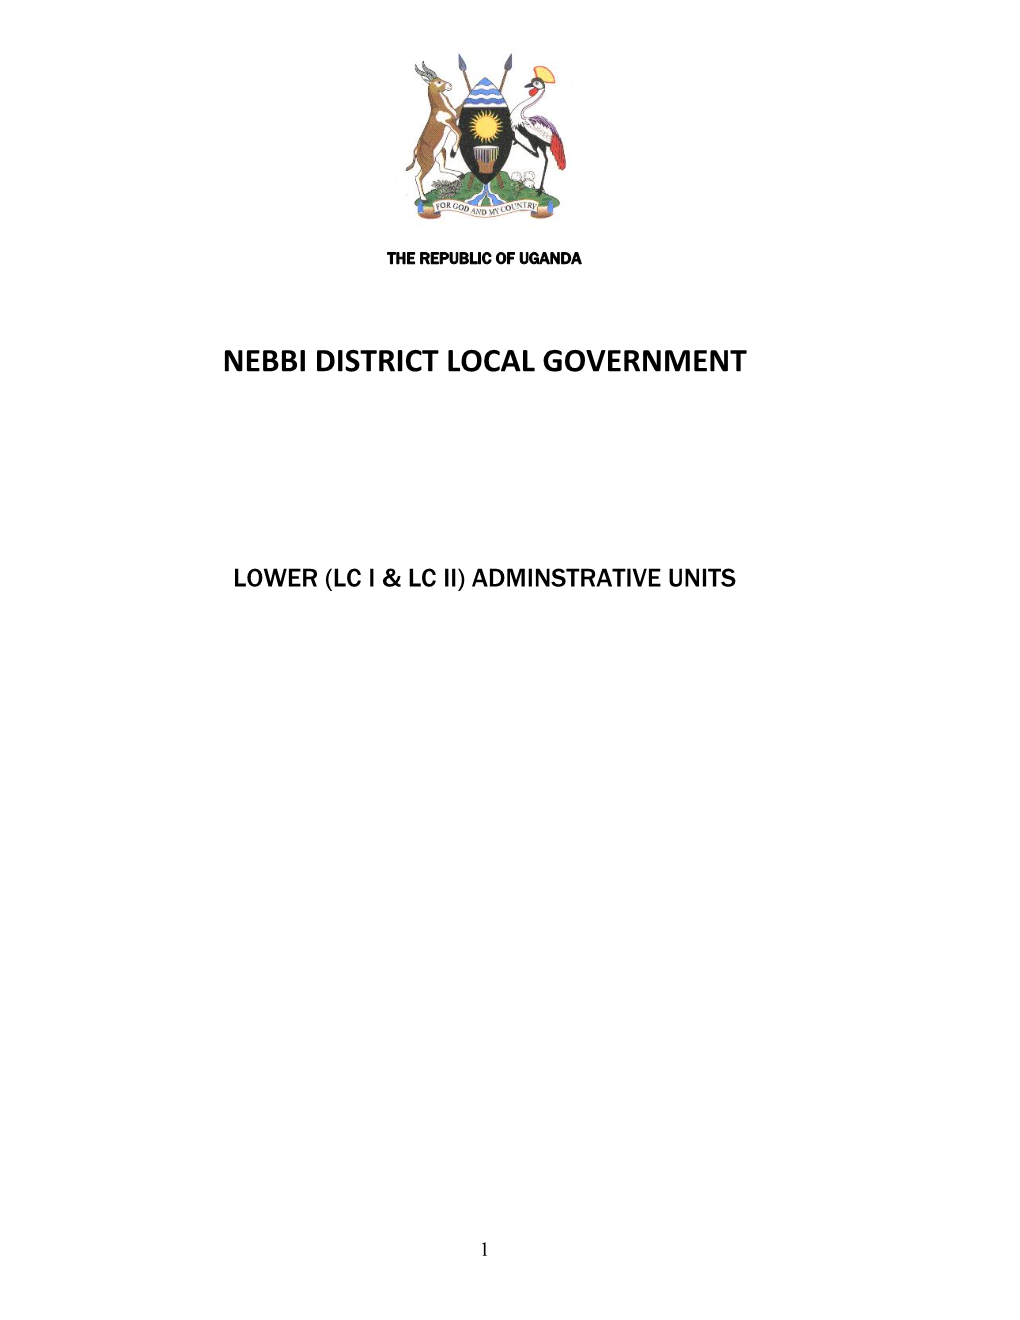 Administrative Units of Nebbi District